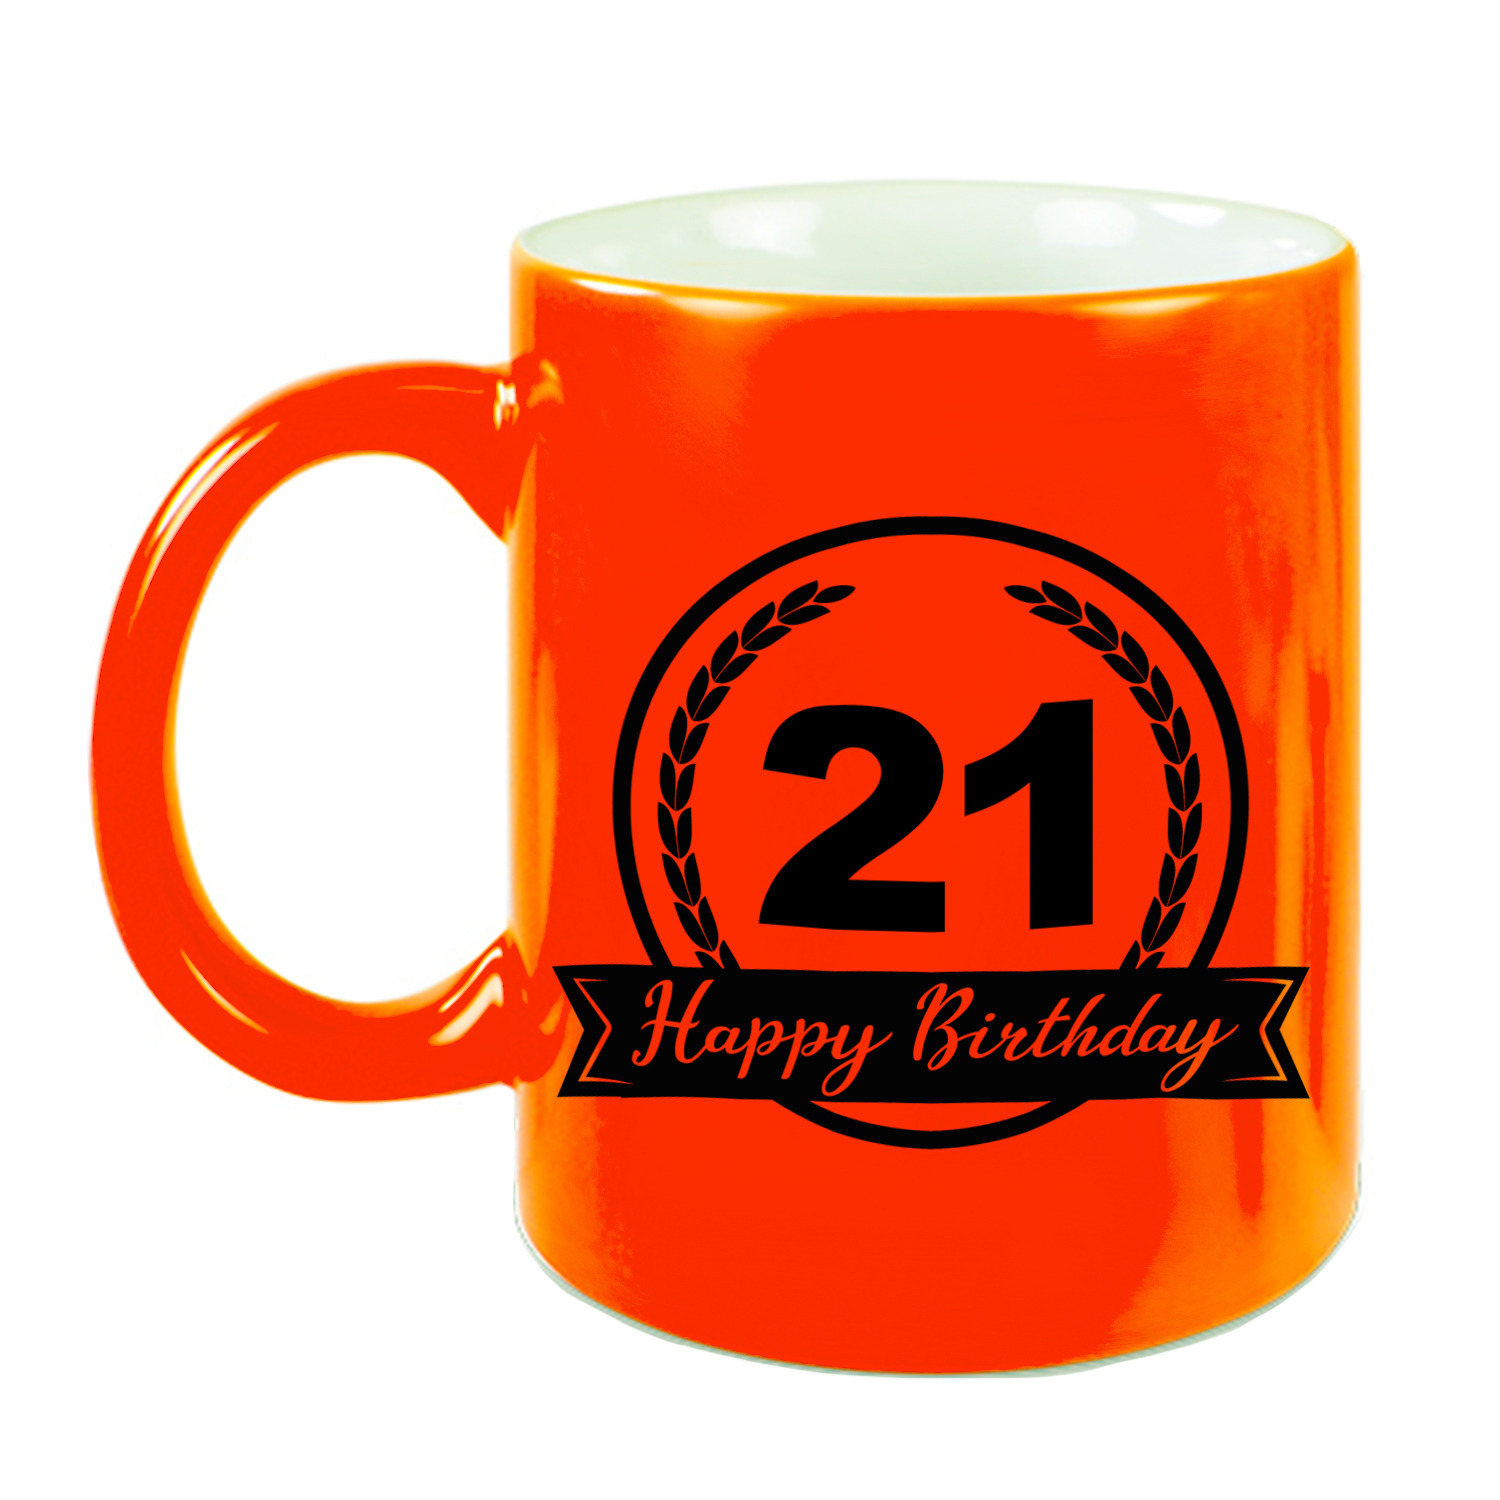 Happy Birthday 21 years cadeau mok-beker neon oranje met wimpel 330 ml